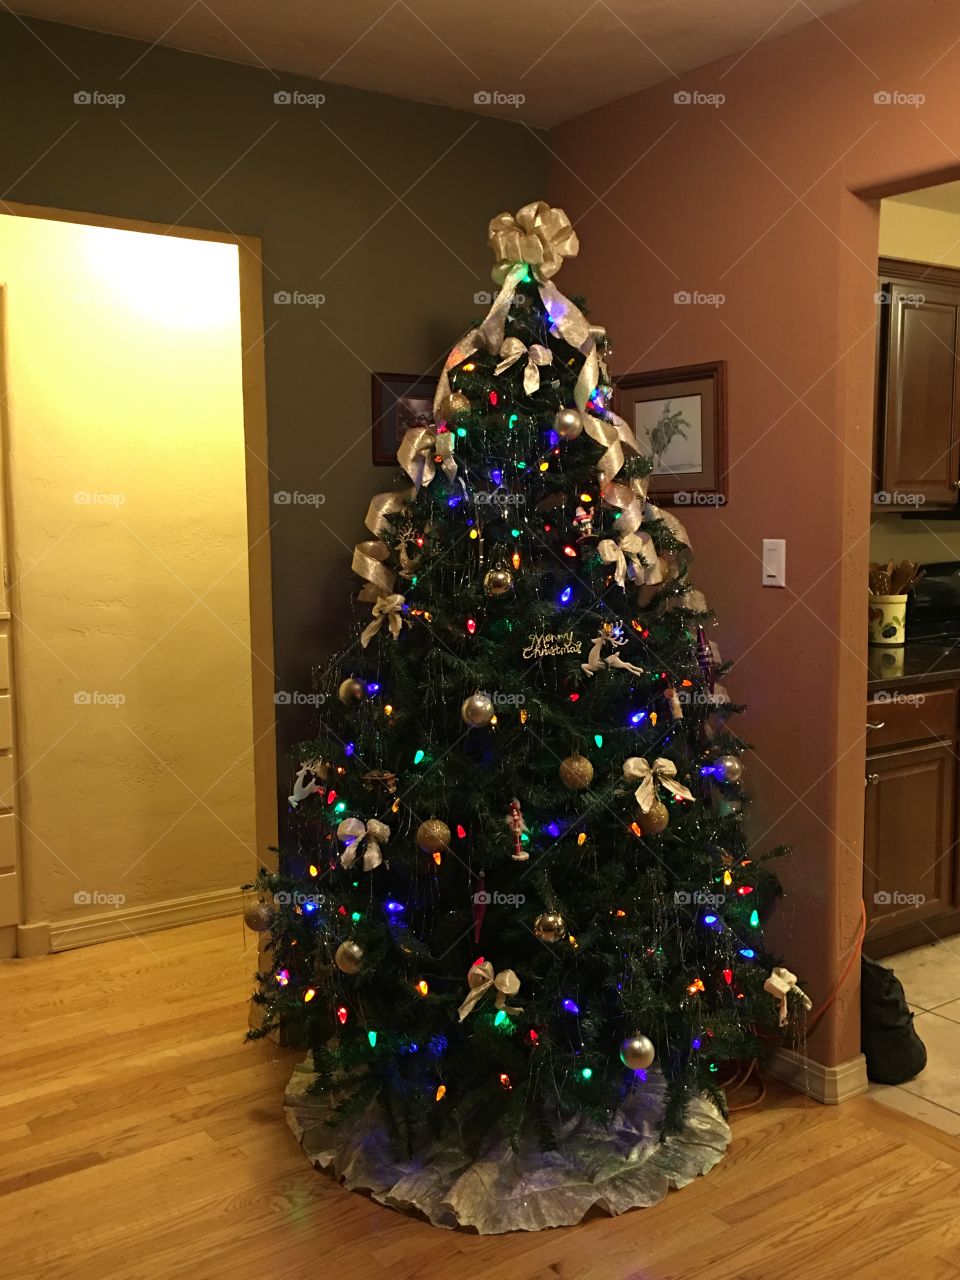 Oh Christmas tree
